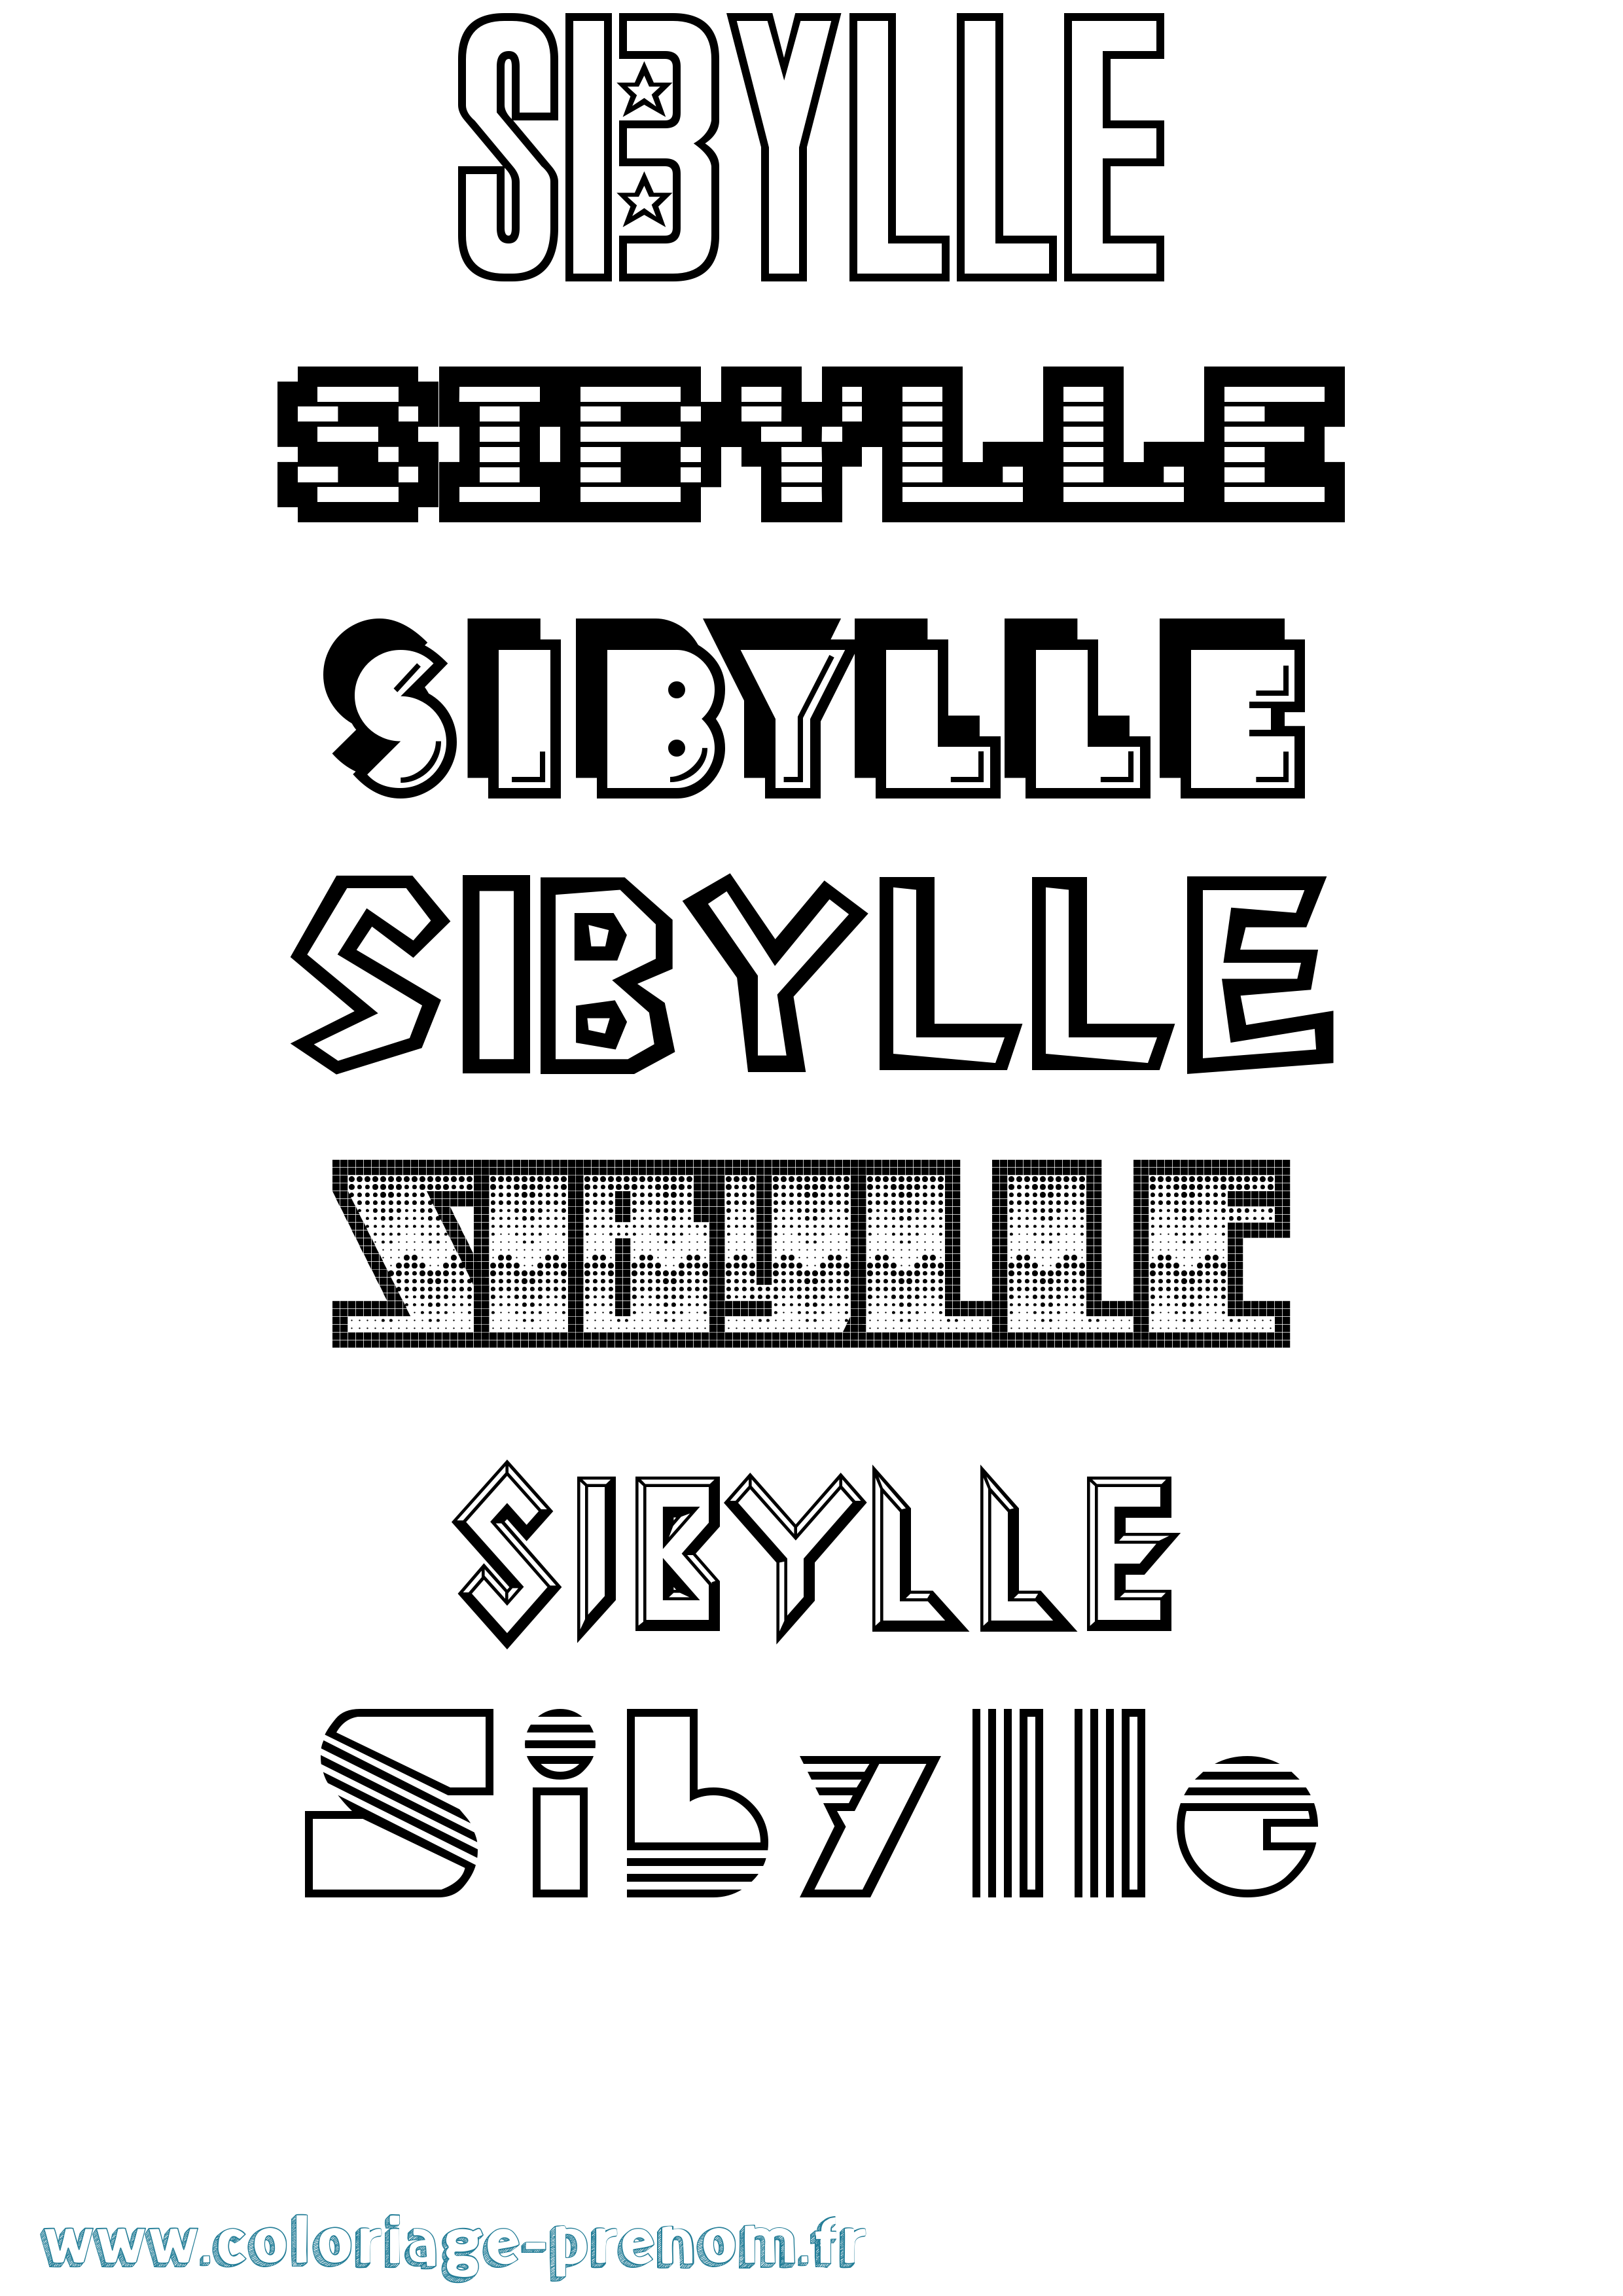 Coloriage prénom Sibylle